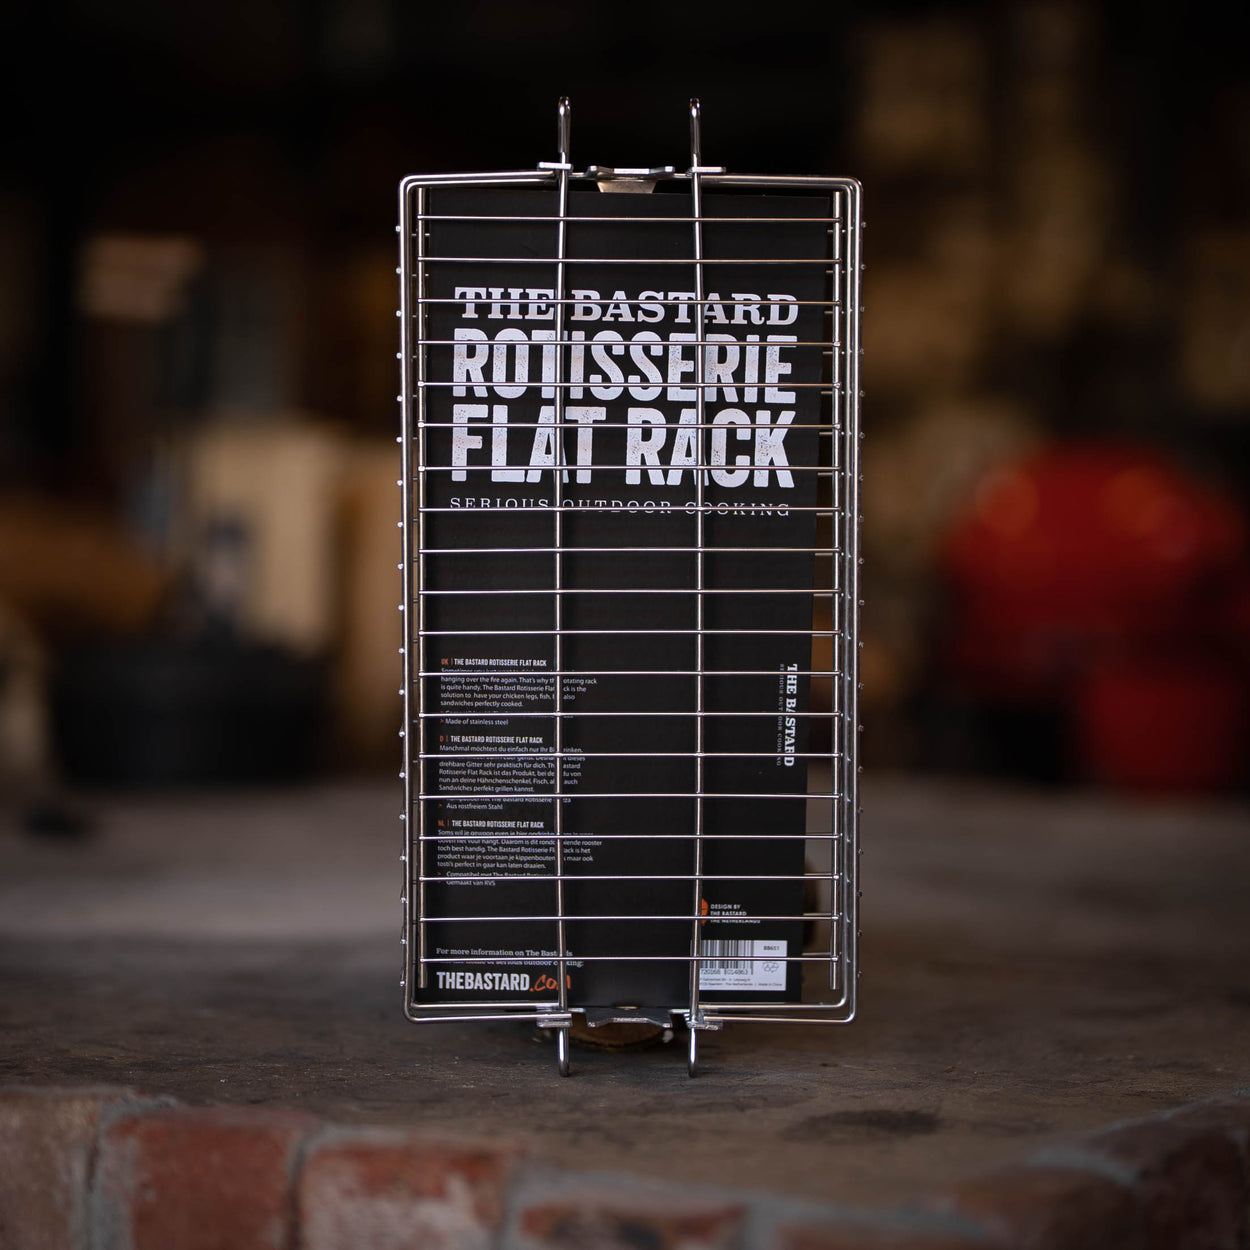 Rotisserie flat rack